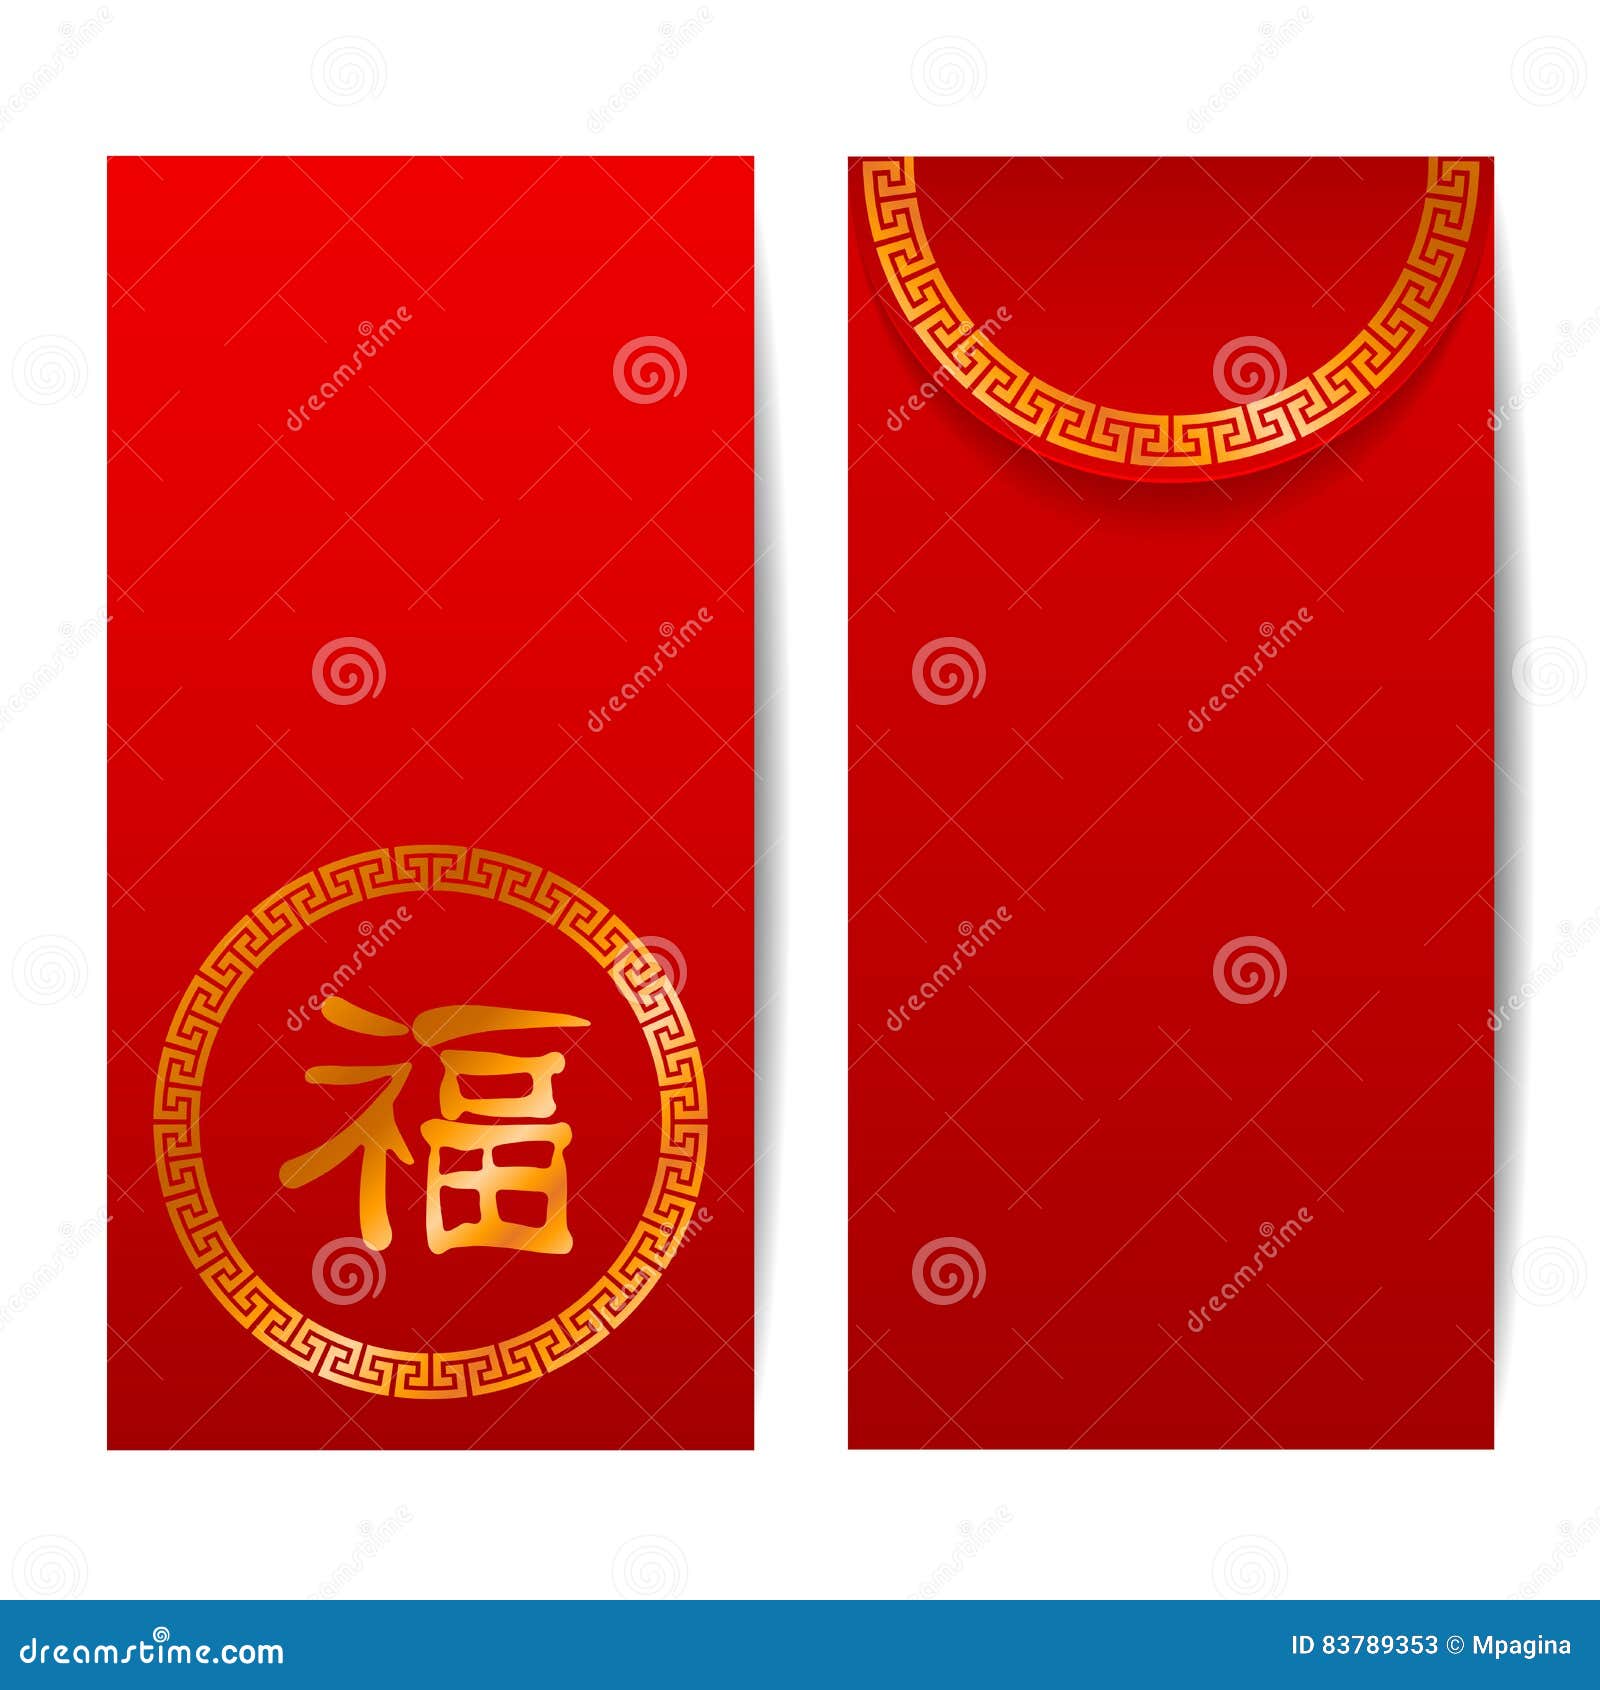 Chinese Red Envelope stock vector. Illustration of elegant - 83789353